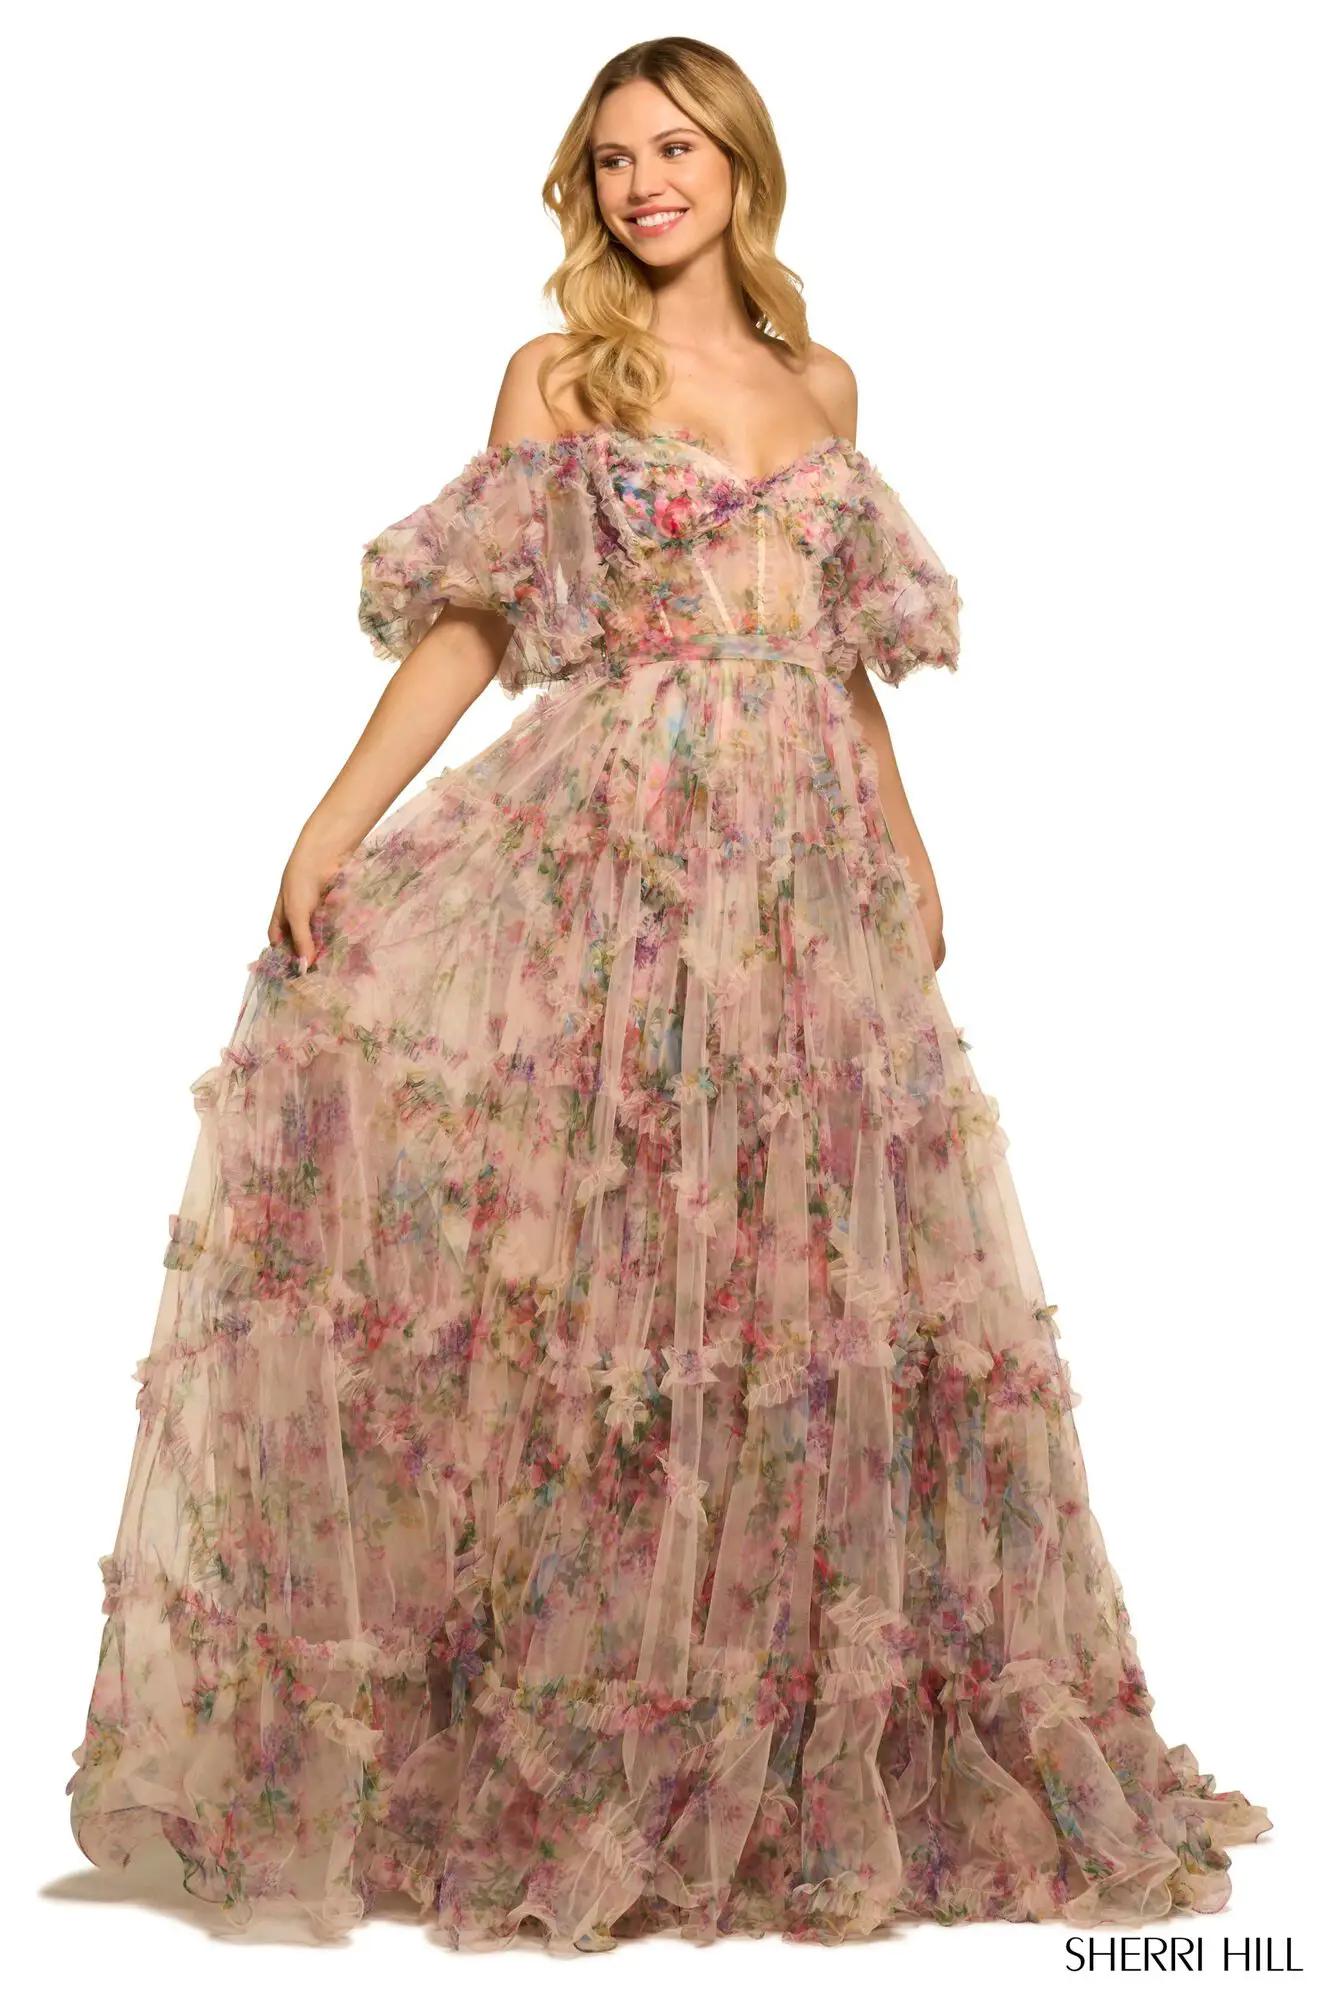 Taylor Swift Eras Tour Dress Folklore Evermore Album Long Floral Print Dress Taylor Swift Folklore Dress Taylor Swift Evermore Dress